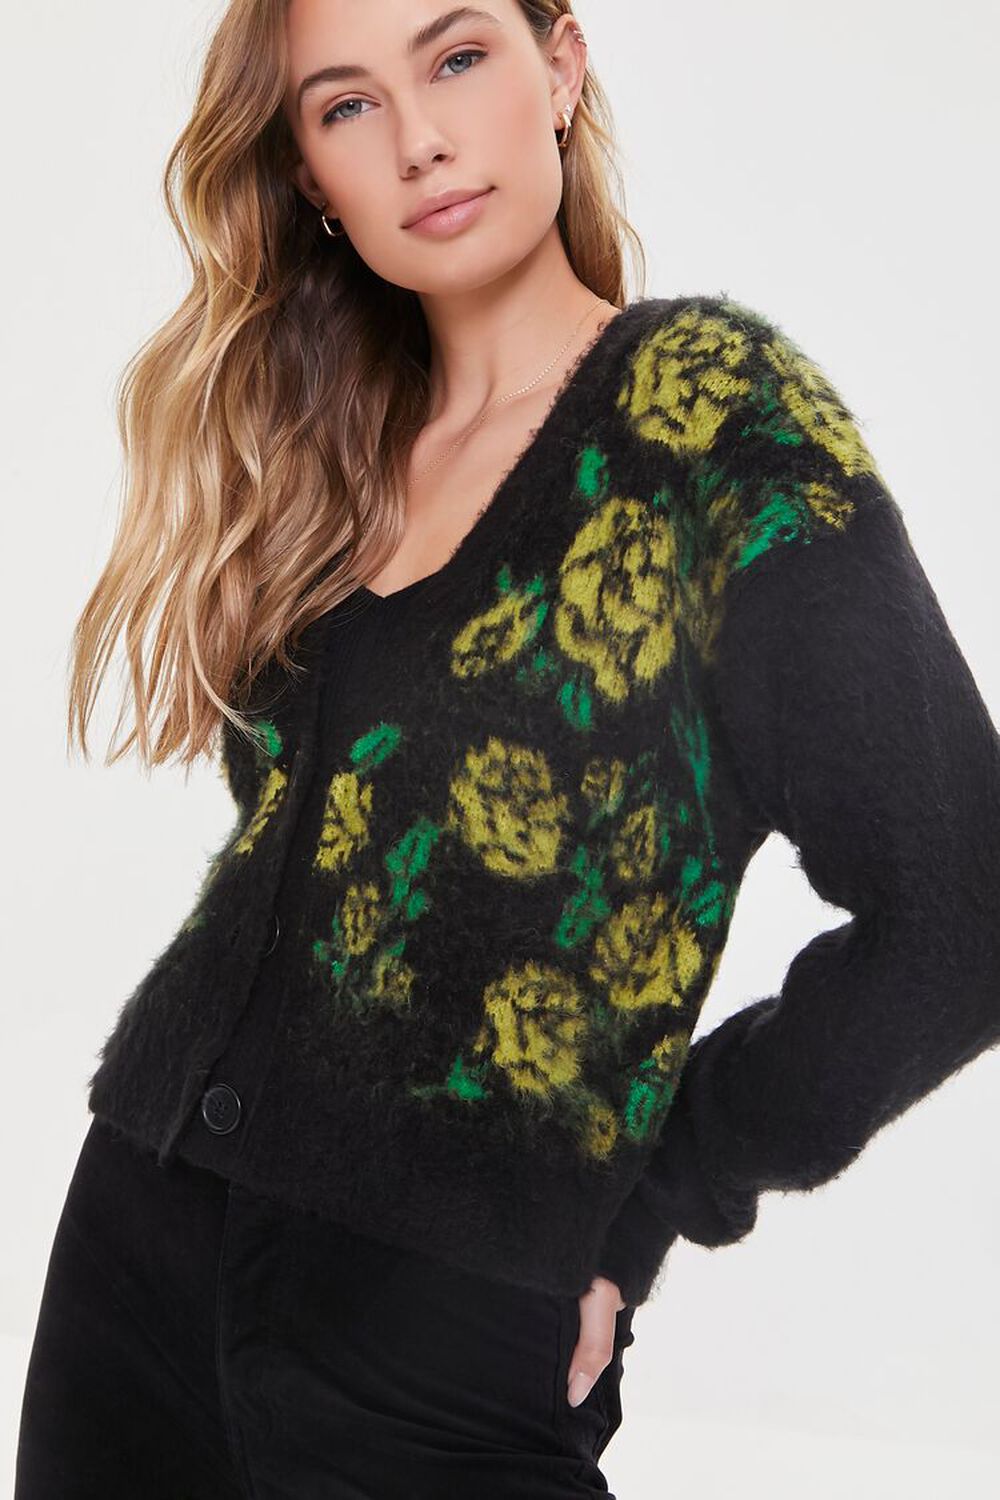 Fuzzy Knit Rose Print Cardigan Sweater, image 1